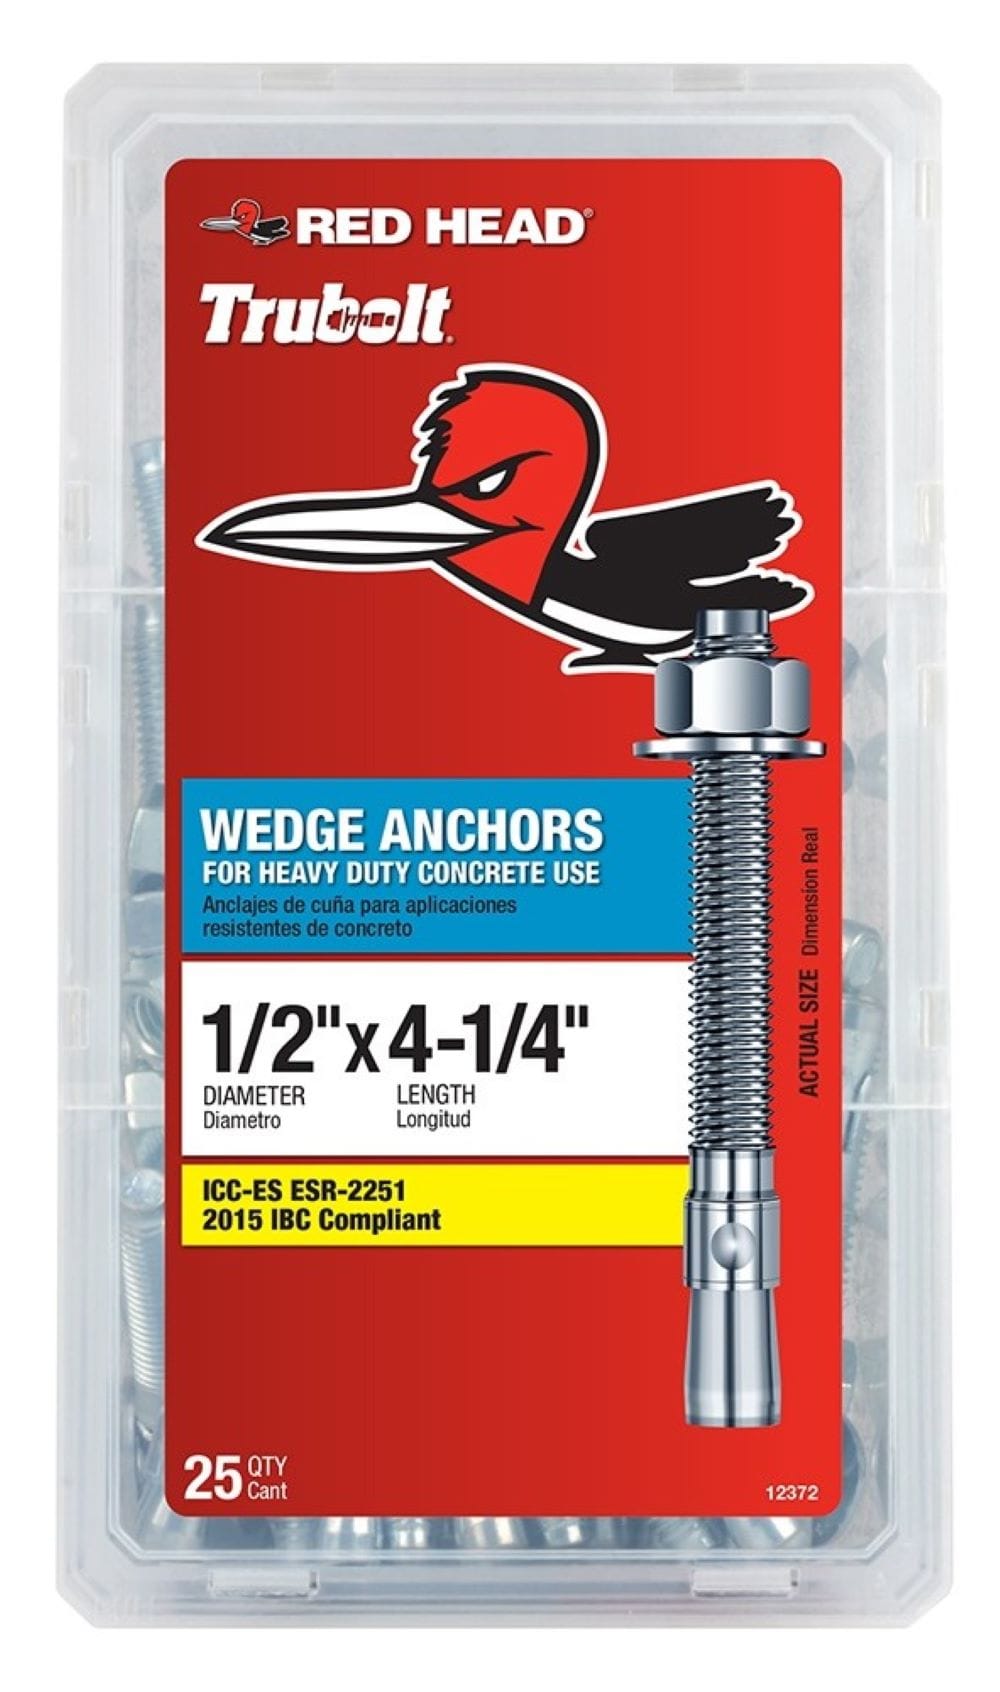 RED HEAD TRUBOLT  Wedge Anchors Heavy Duty Concrete 1/2" x 4 1/4" Box of 25 